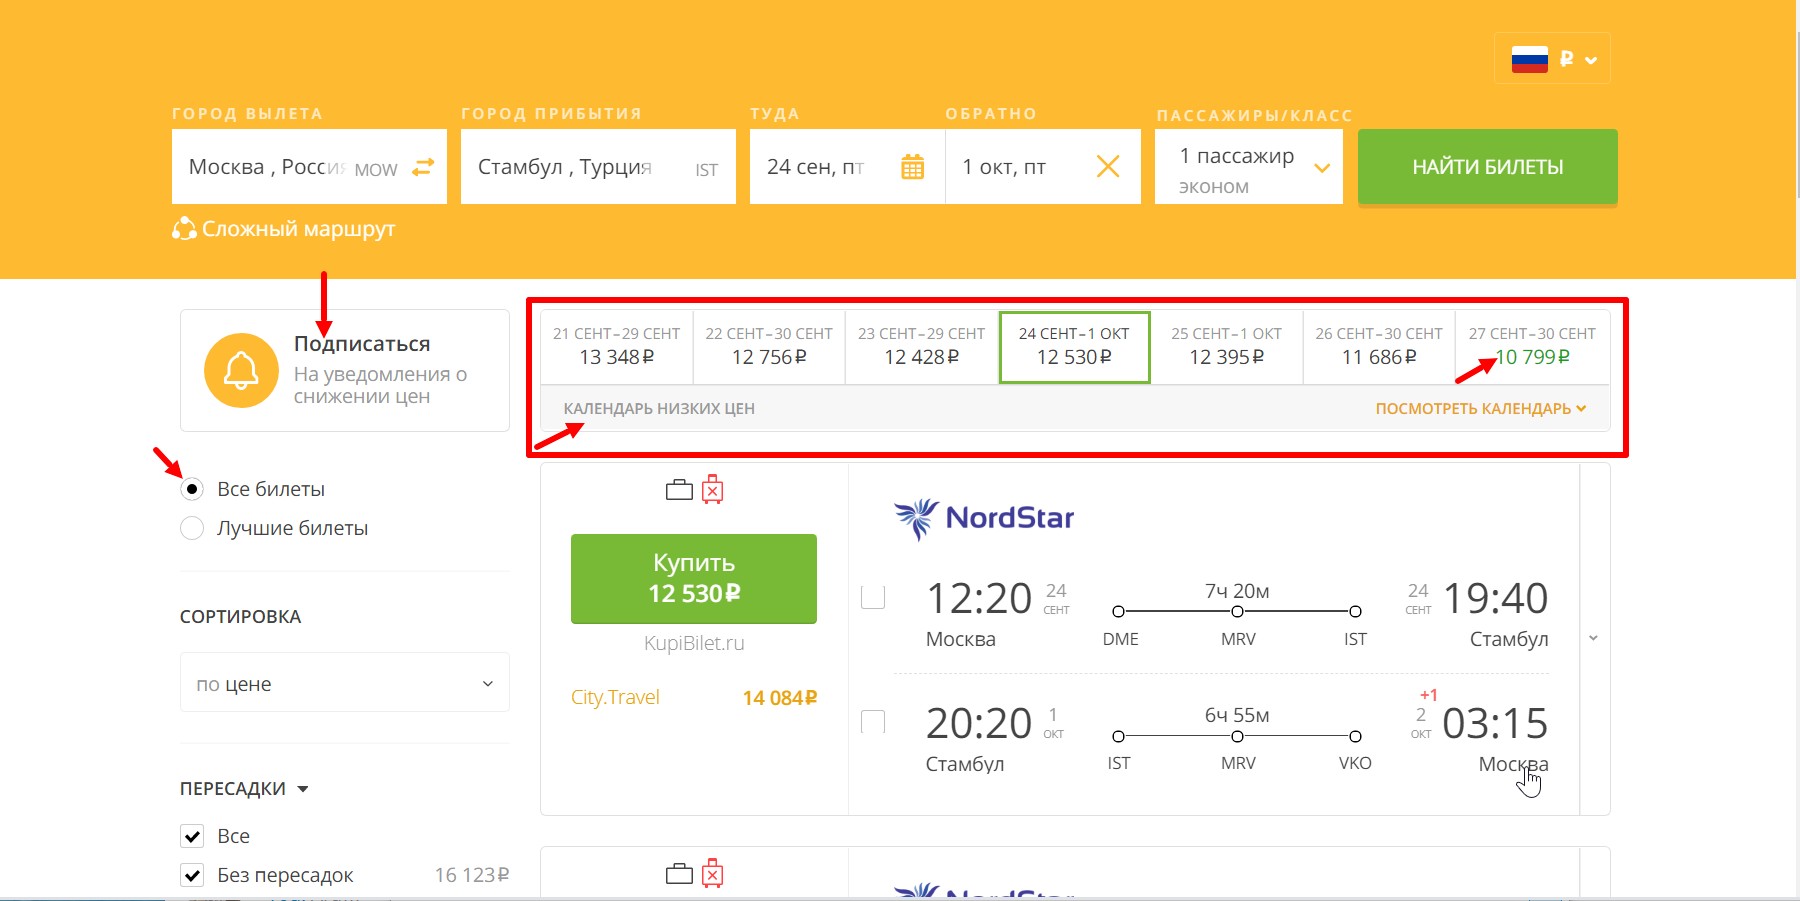 Пример поиска авиабилета из Москвы в Стамбул с календарем цен